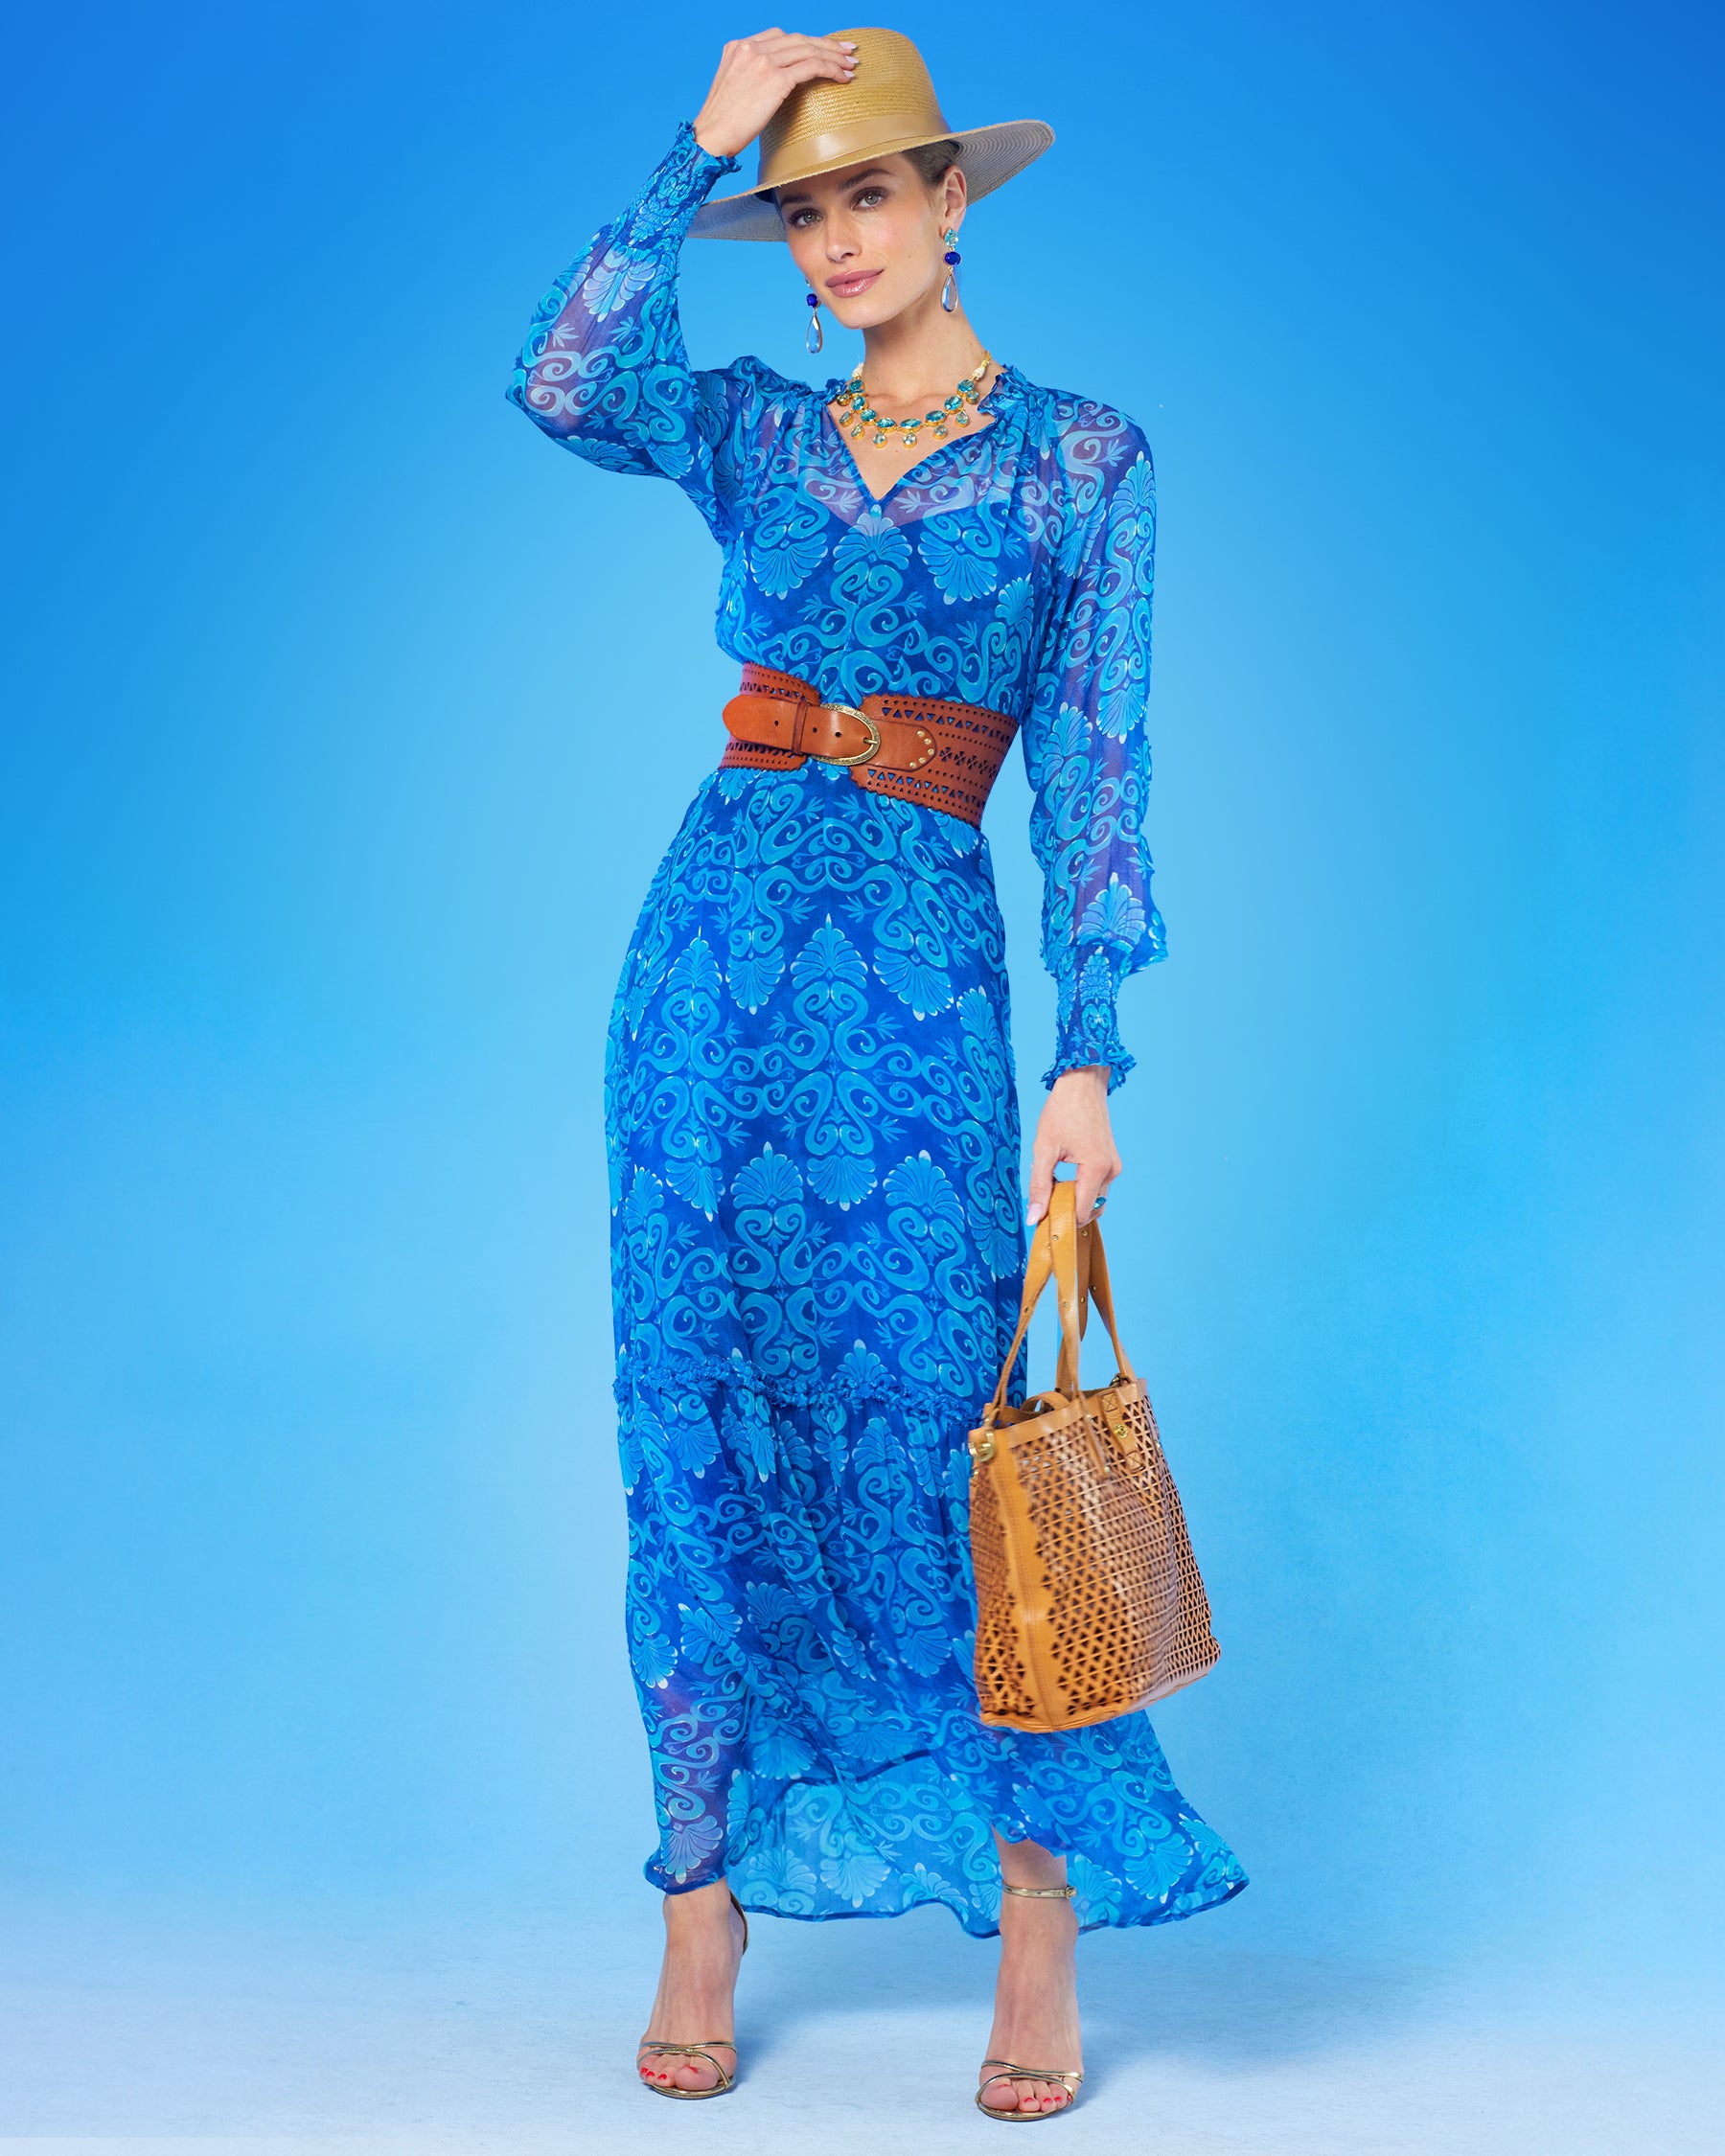 Campomaggi Malibu Pyramid Cut Tote Bag in Tan worn with the Celine Maxi Crinkle Chiffon Dress in Blue Mediterranean Swirl